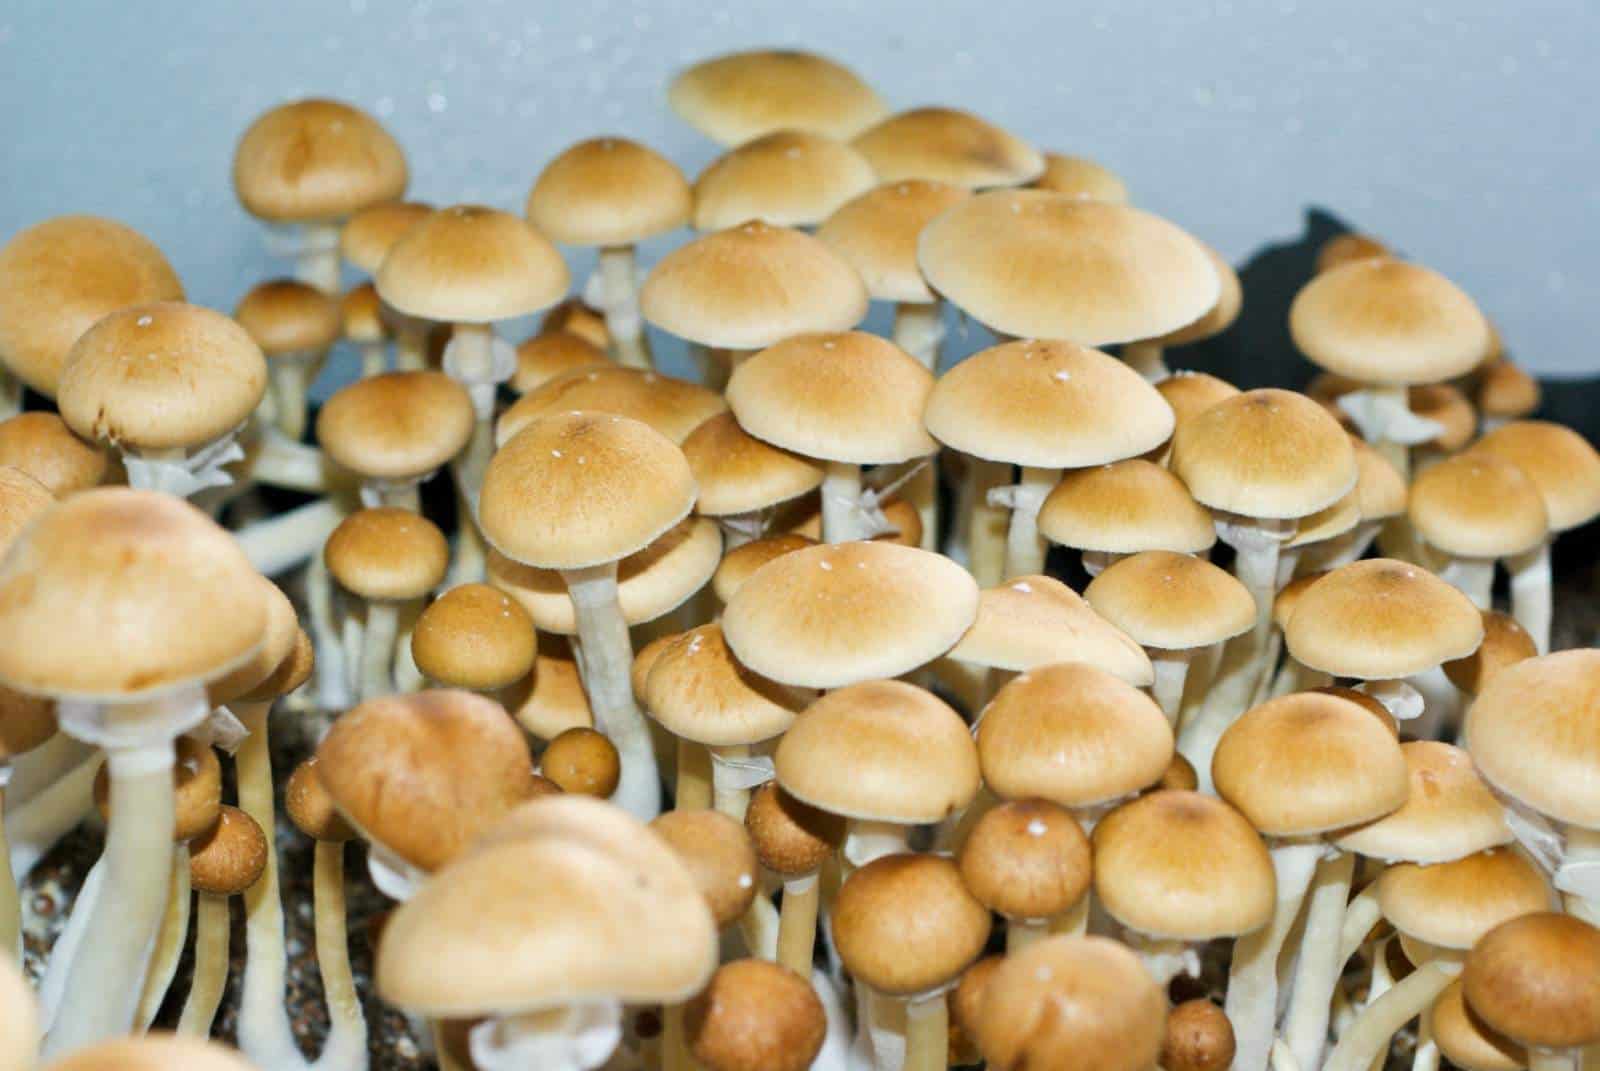 Psychedelic Mushrooms: A Brief History